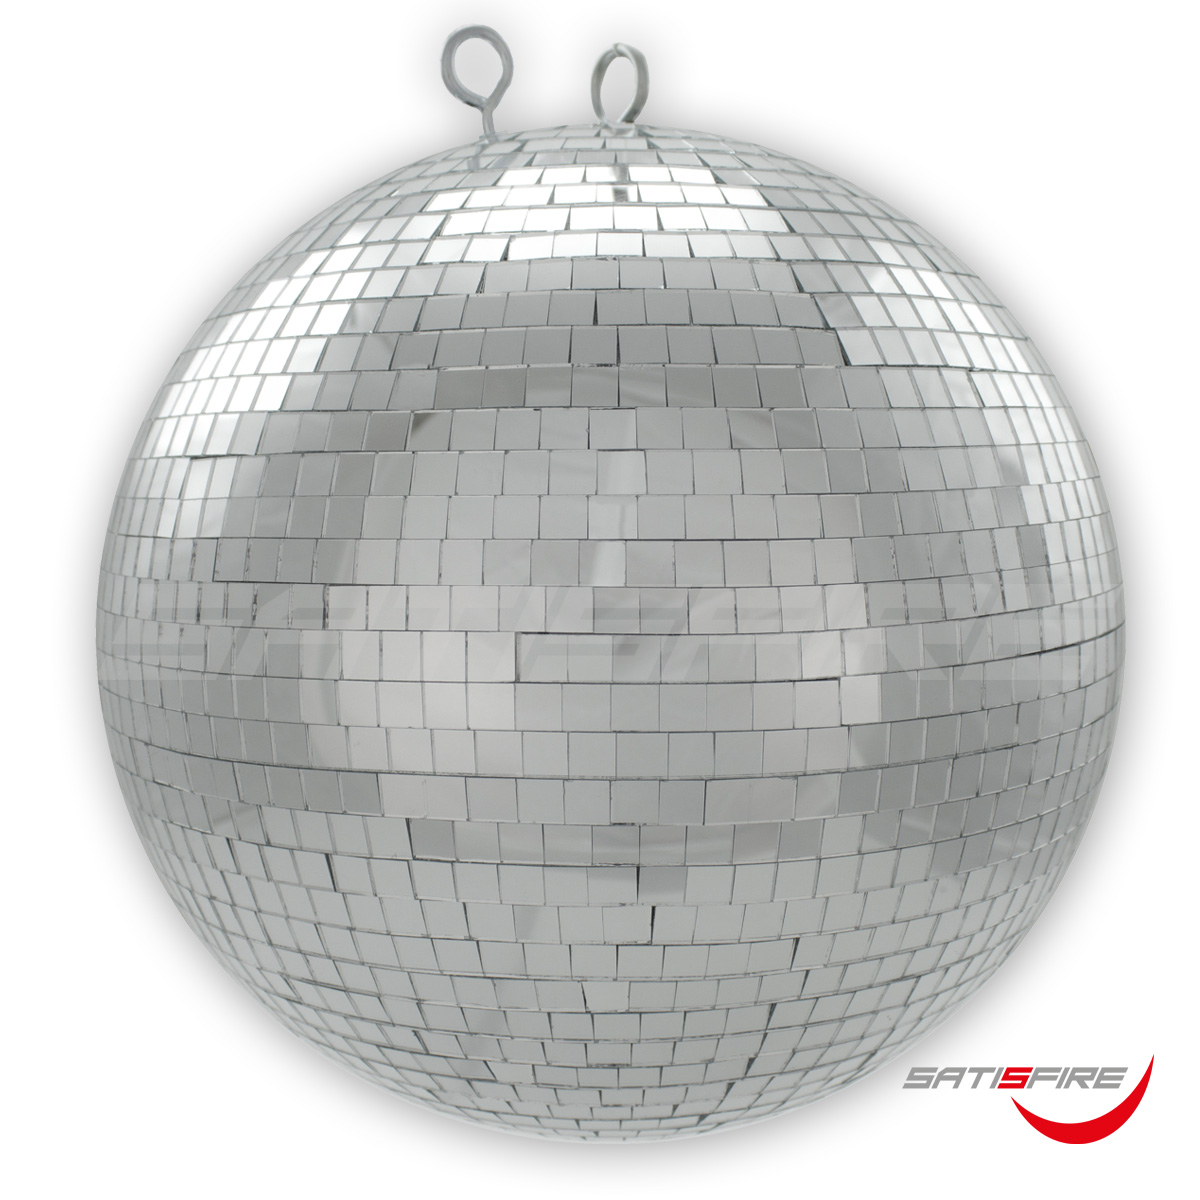 Spiegelkugel 30cm silber- Diskokugel (Discokugel) Party Lichteffekt - Echtglas - mirrorball silver chrome